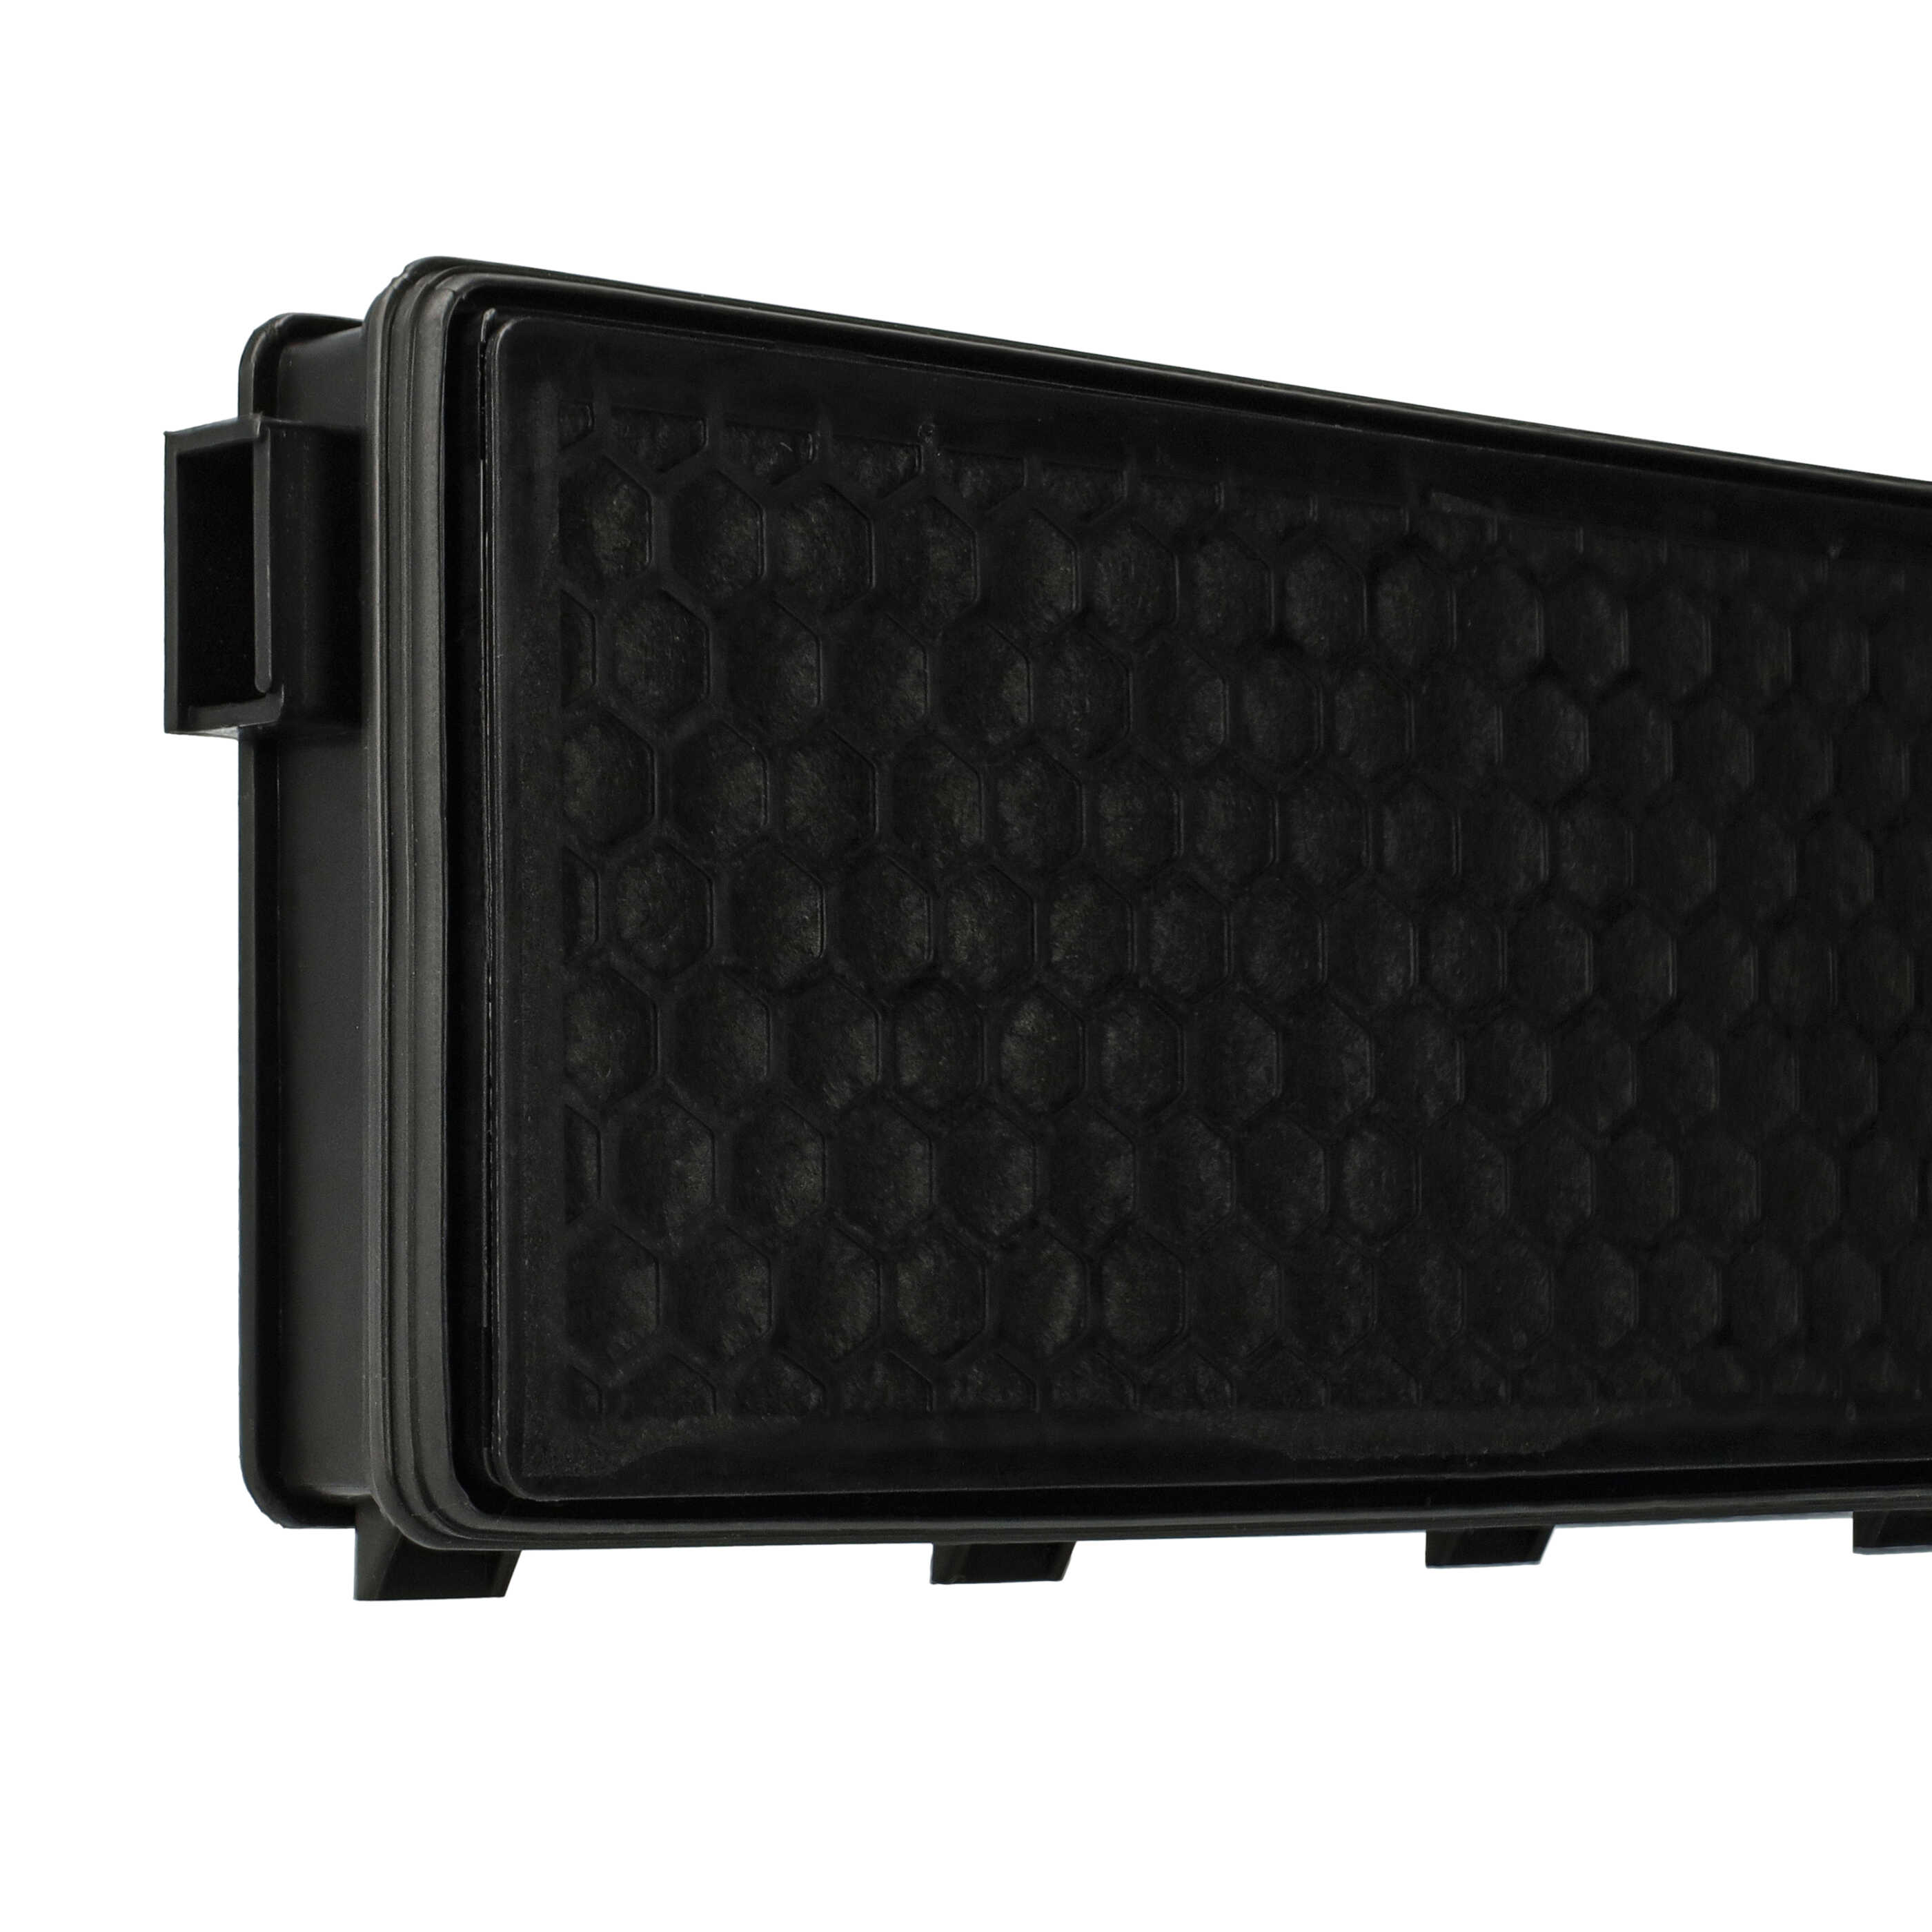 Filtro reemplaza Miele 5996880, 5996882, 5996881 para aspiradora - filtro de escape HEPA negro / blanco